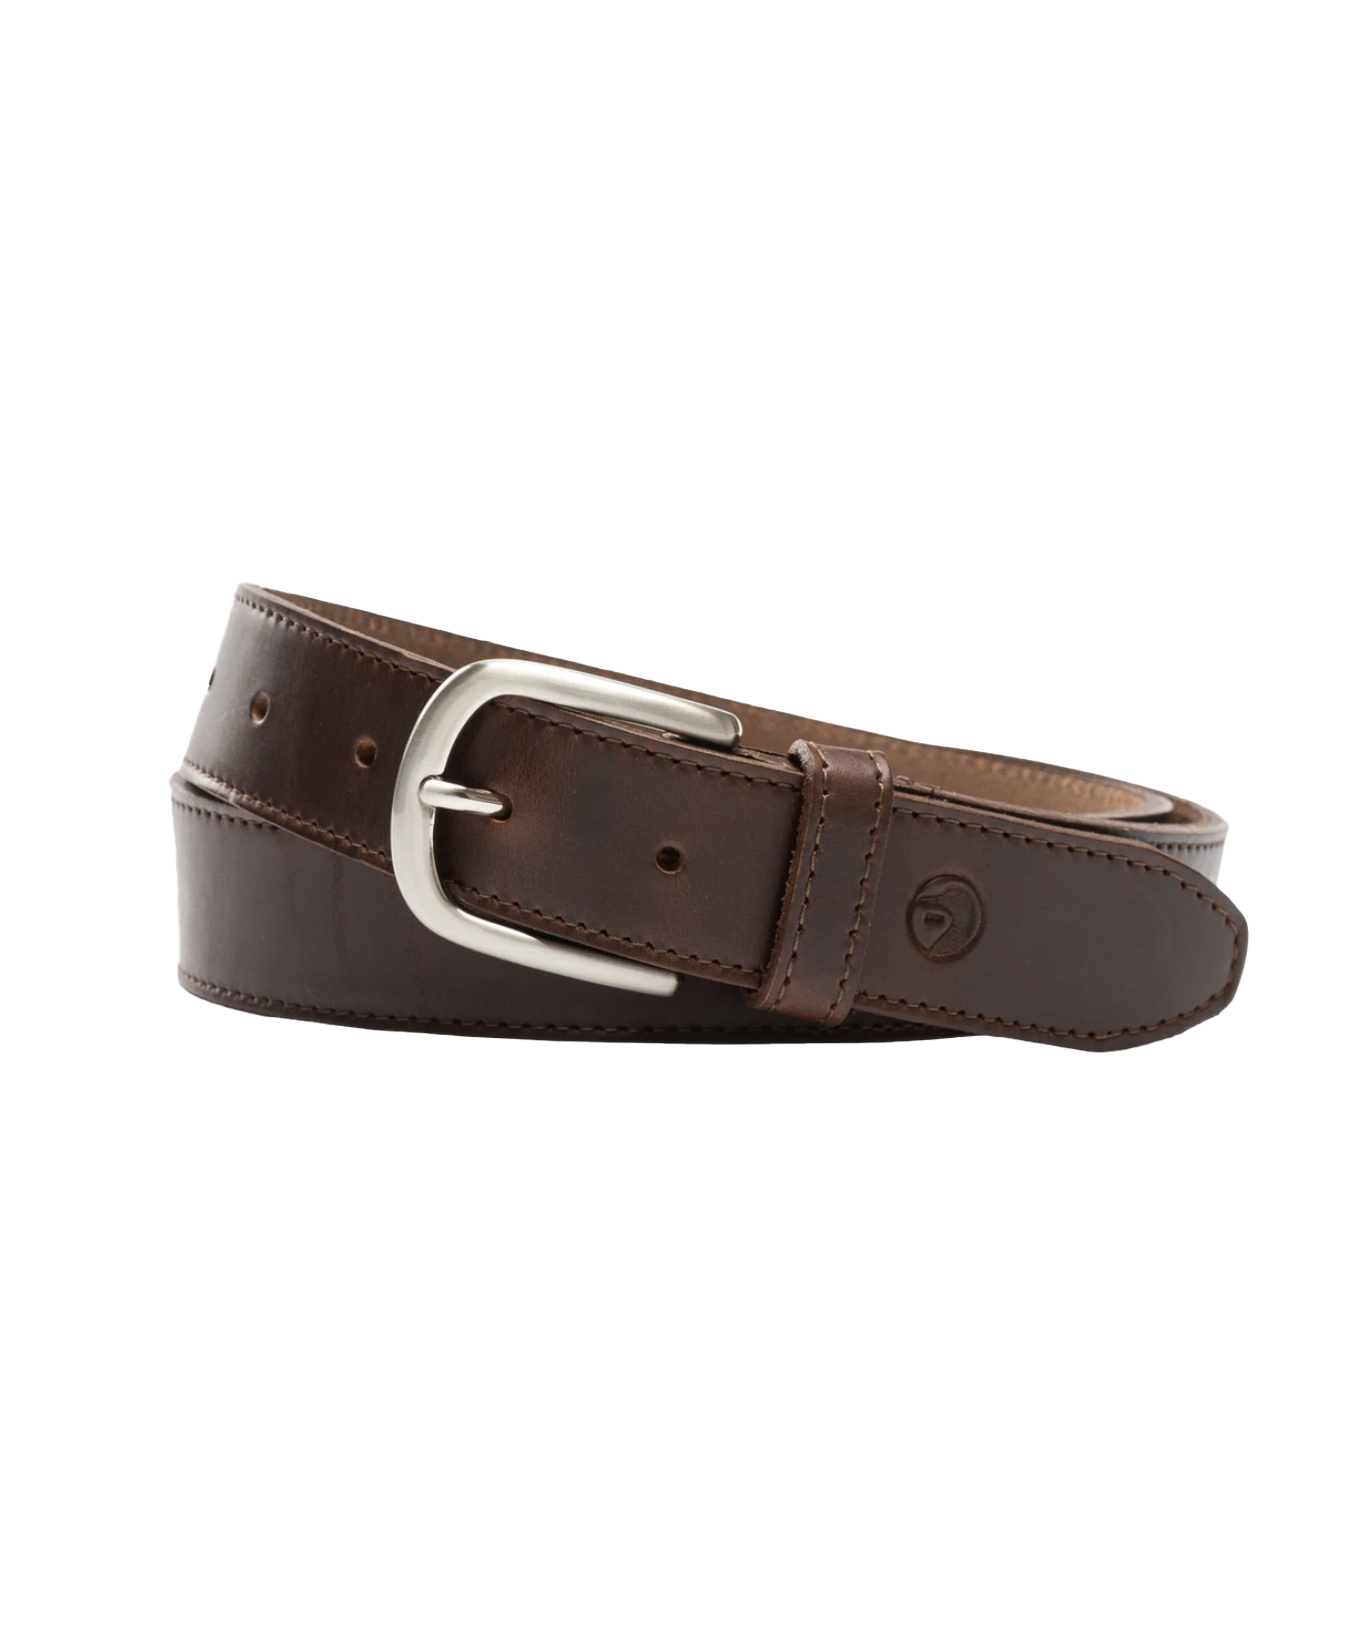 DH Leather Belt Nickel Buckel